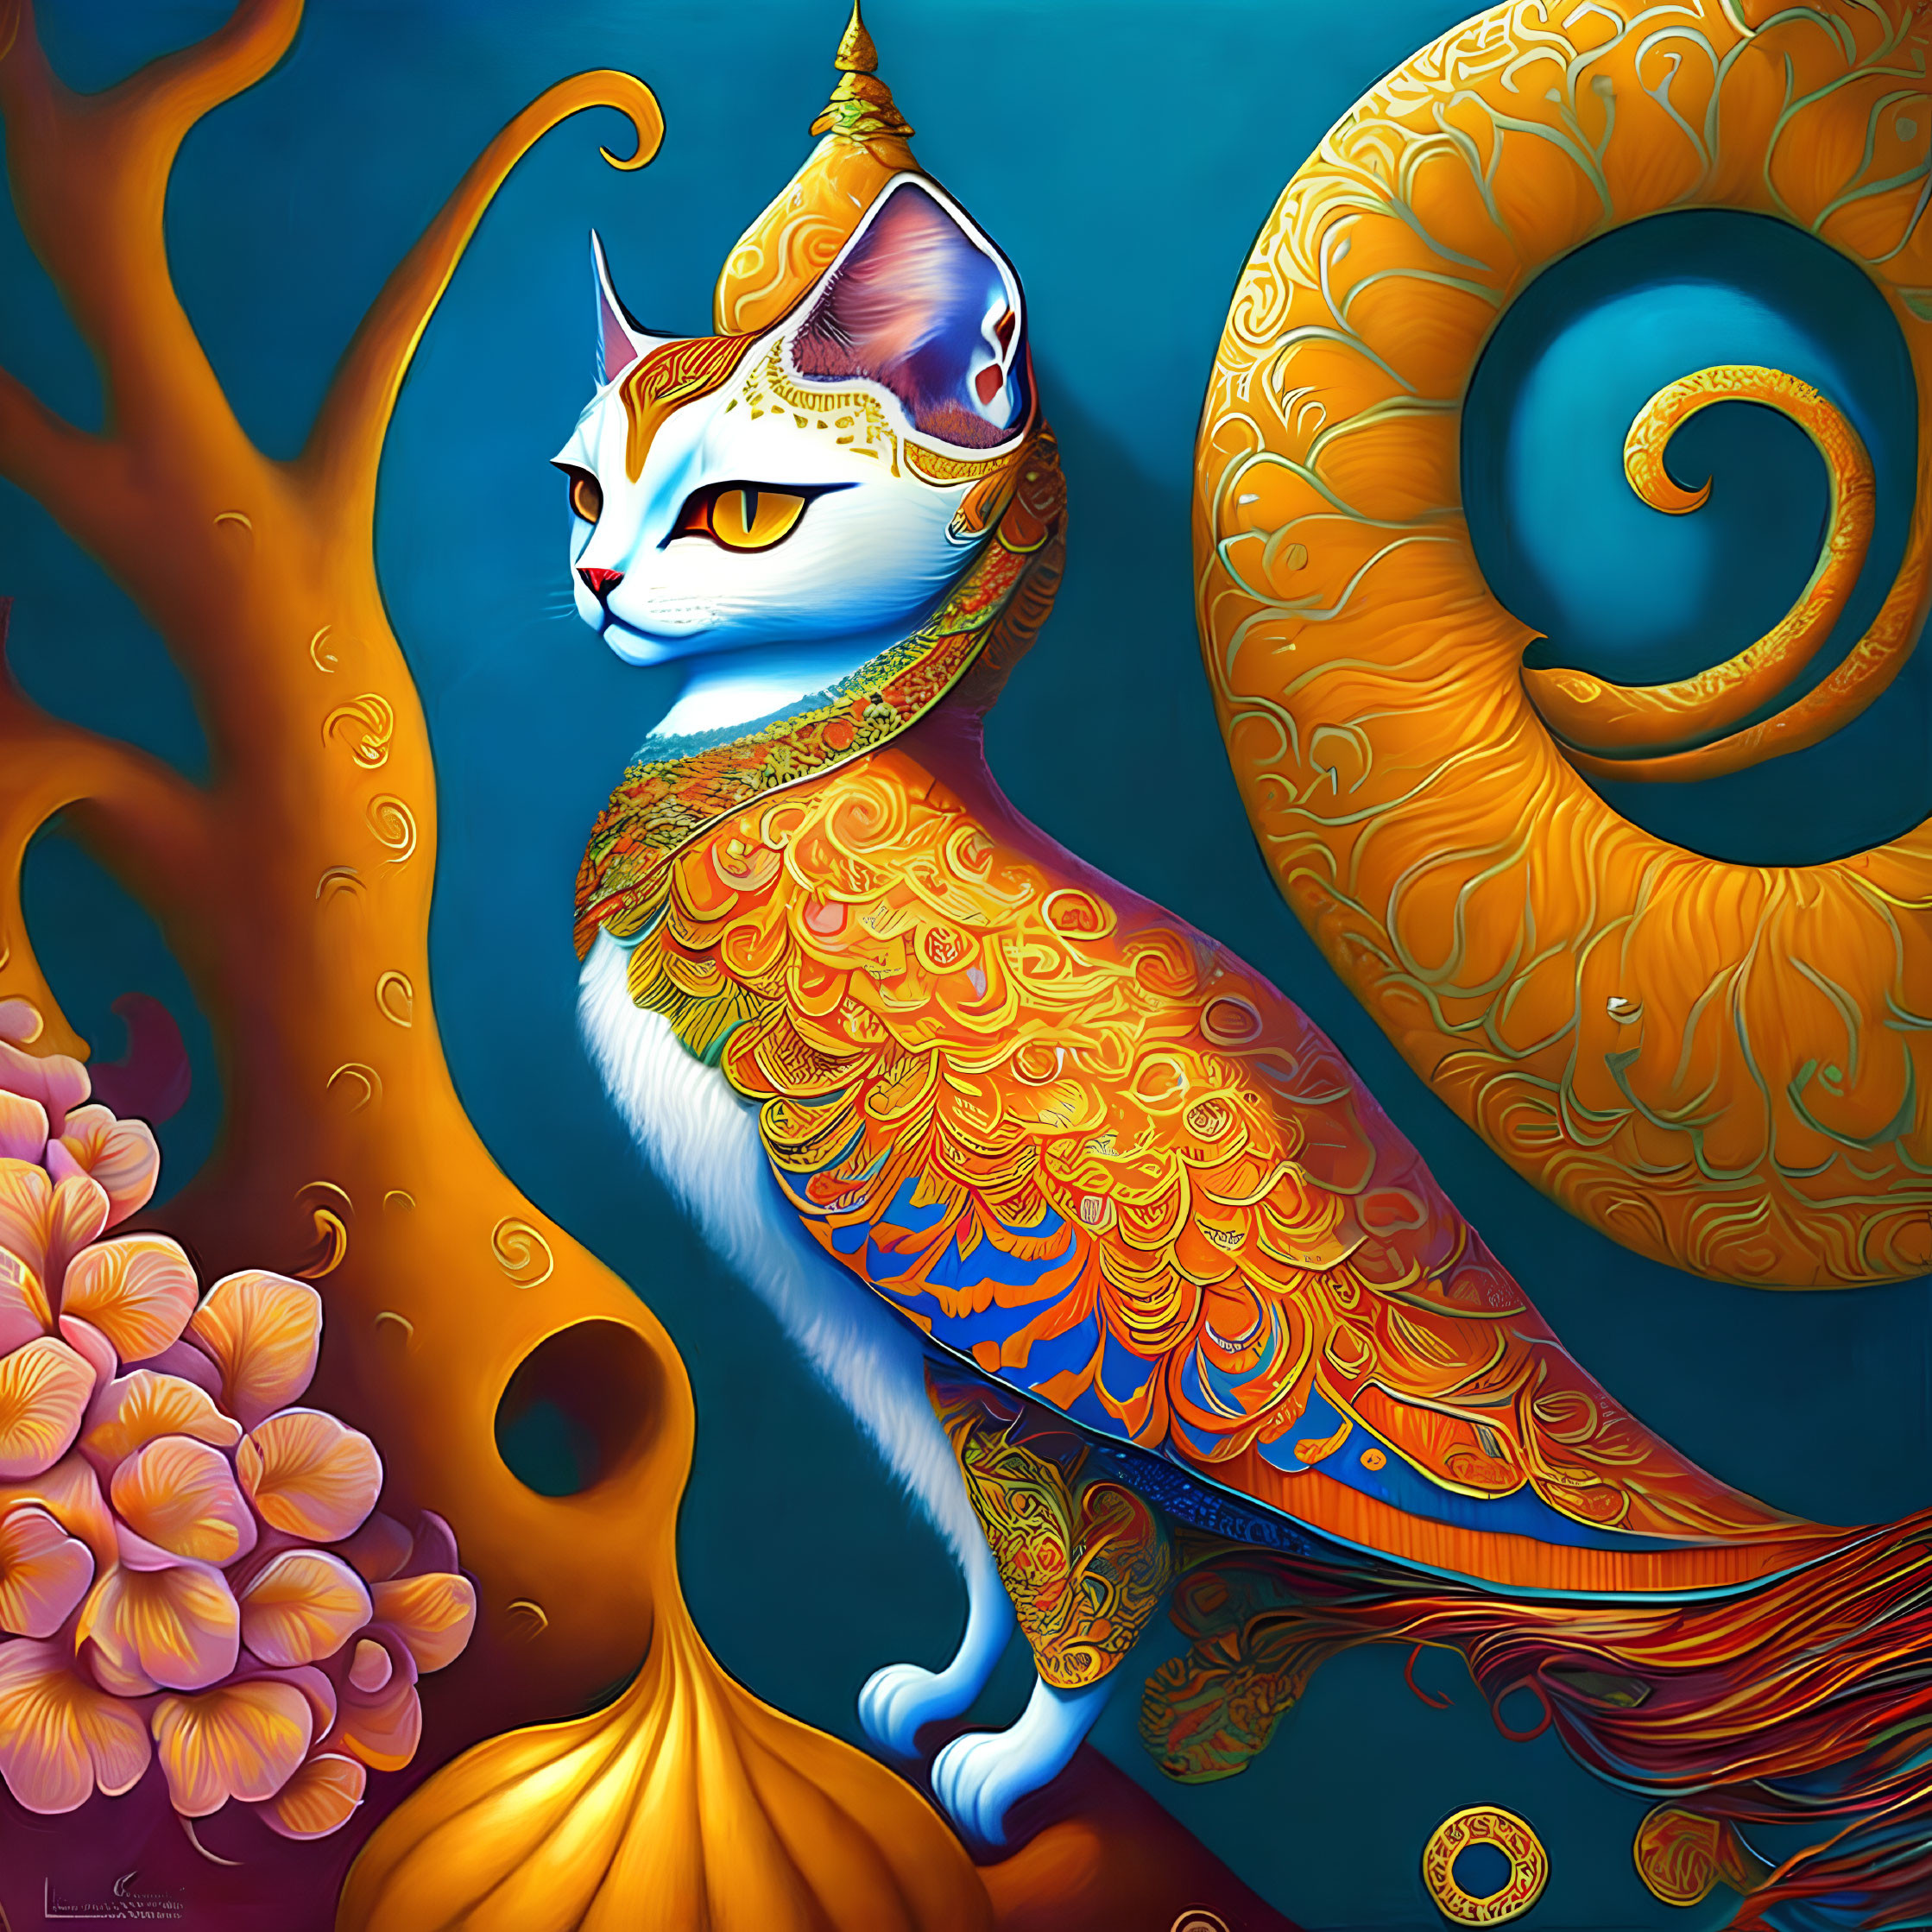 Colorful Stylized Regal Cat Illustration on Blue Background